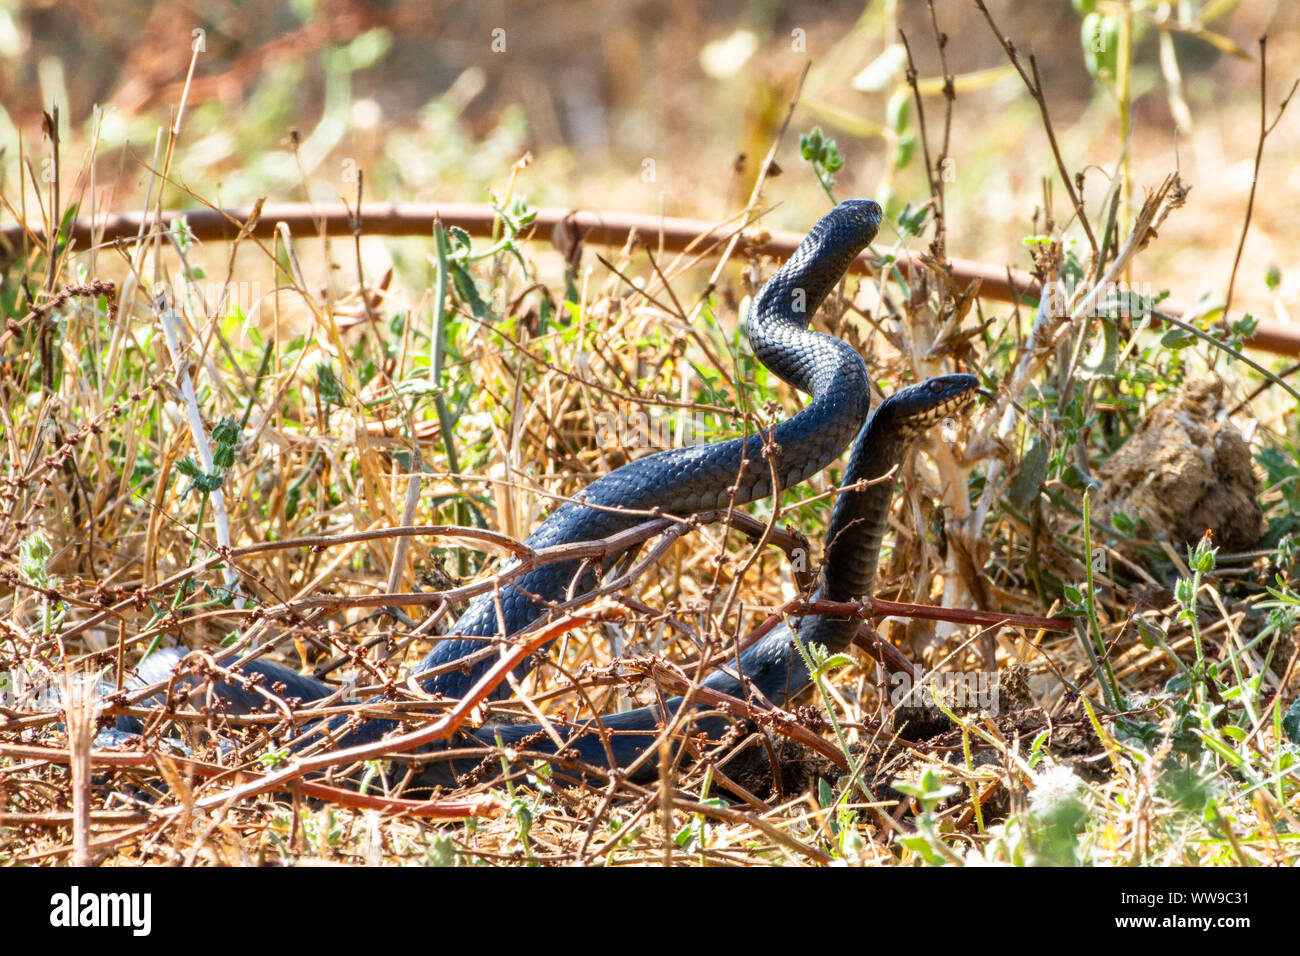 Black Whipsnake  (Dolichophis jugularis asianus) Stock Photo